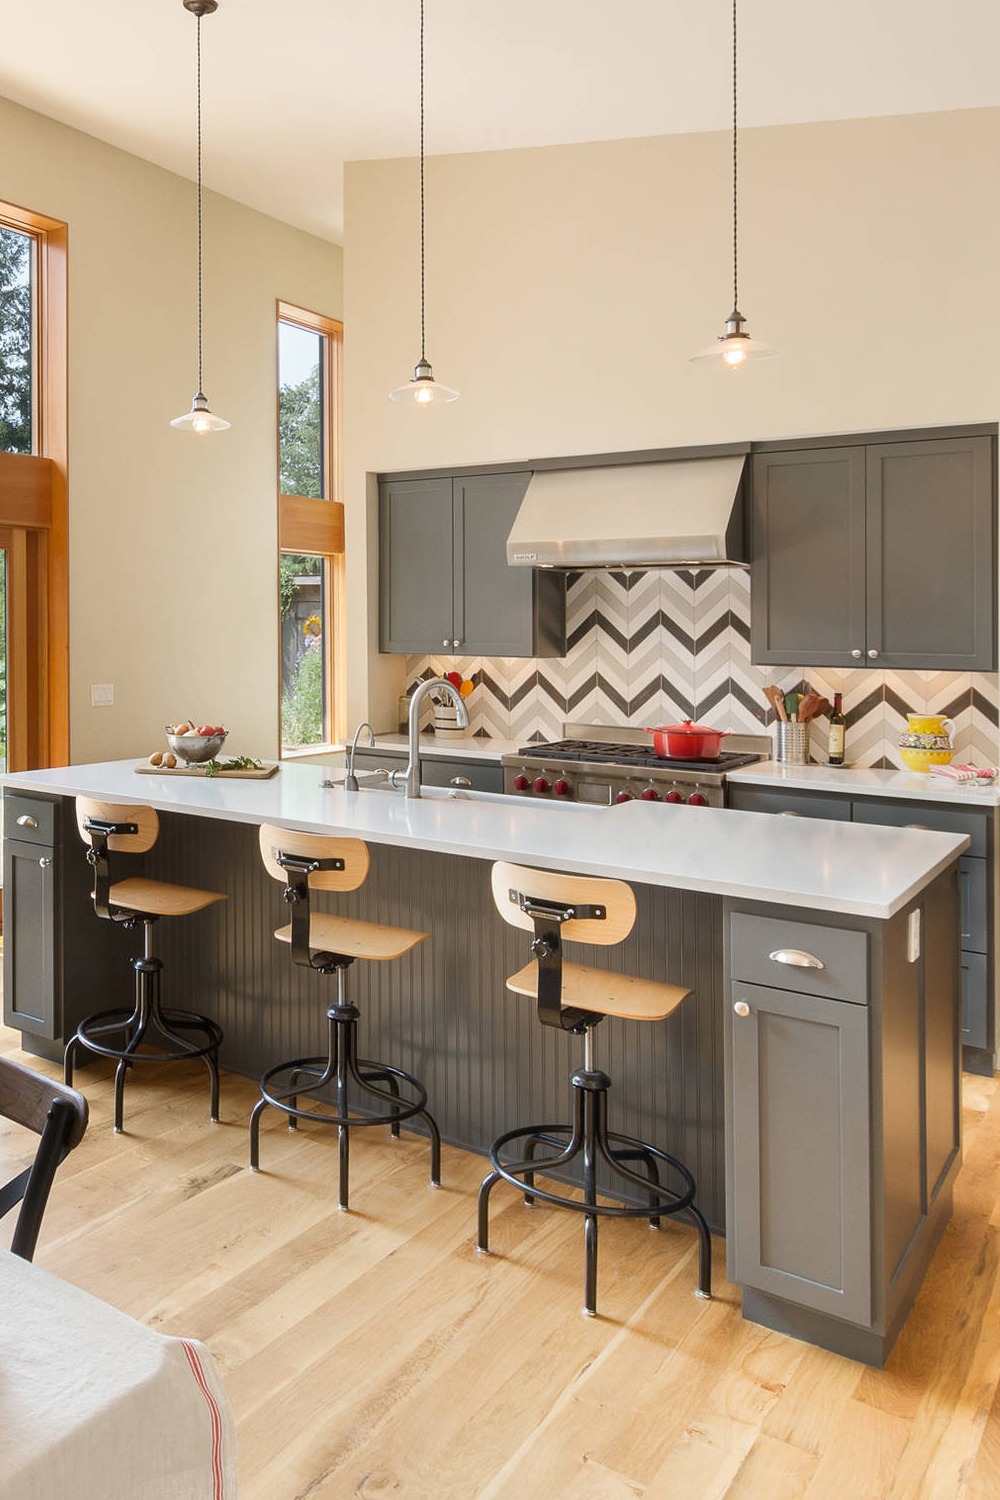 Contemporary Chevron Style Backsplash Tile Gray Kitchen Cabinets Island Wood Floor Cream Walls Design Look Add Color